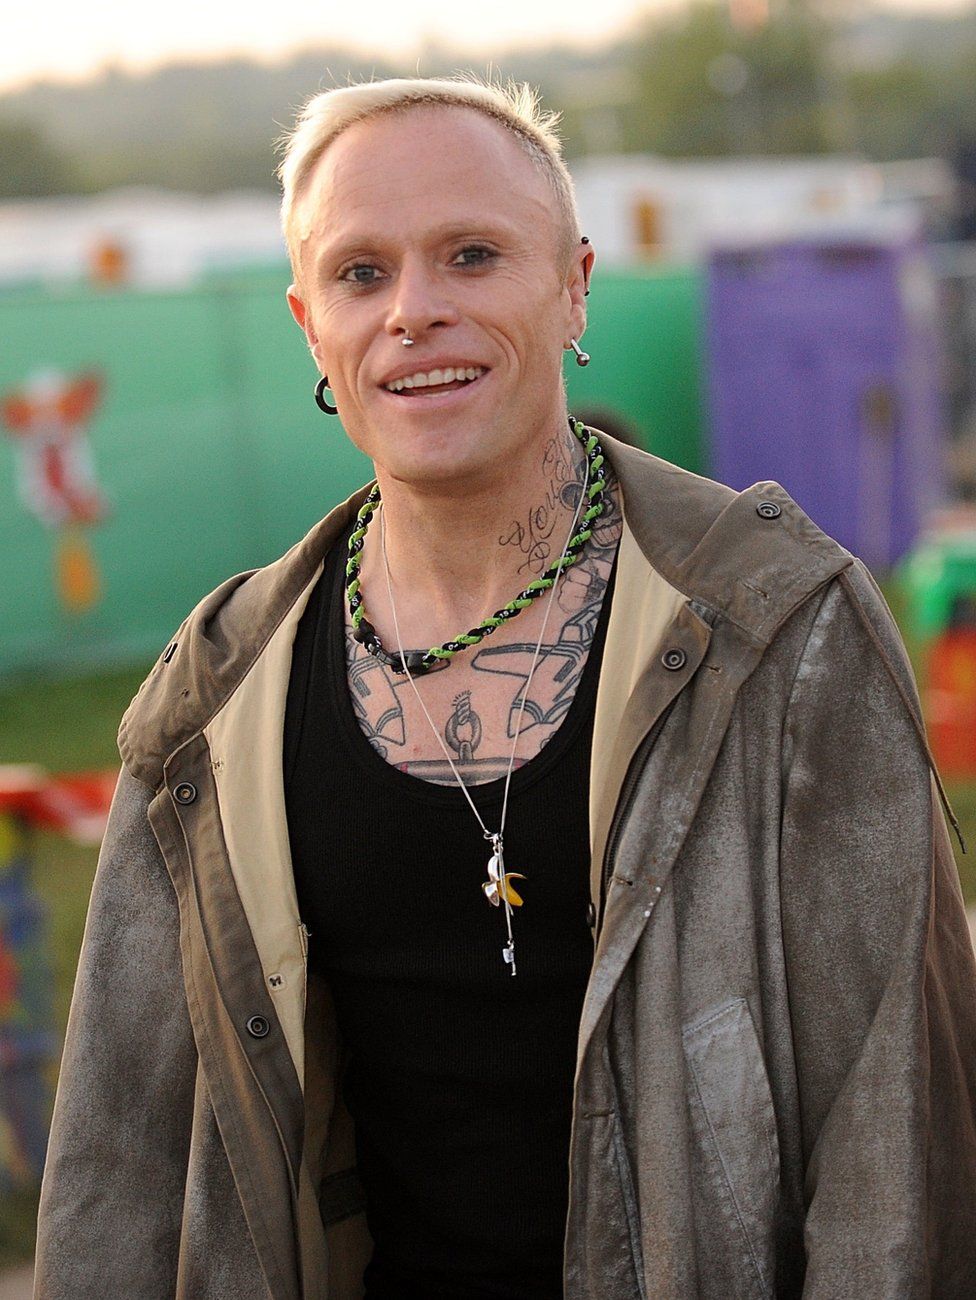 Keith Flint at Glastonbury Festival, 2009